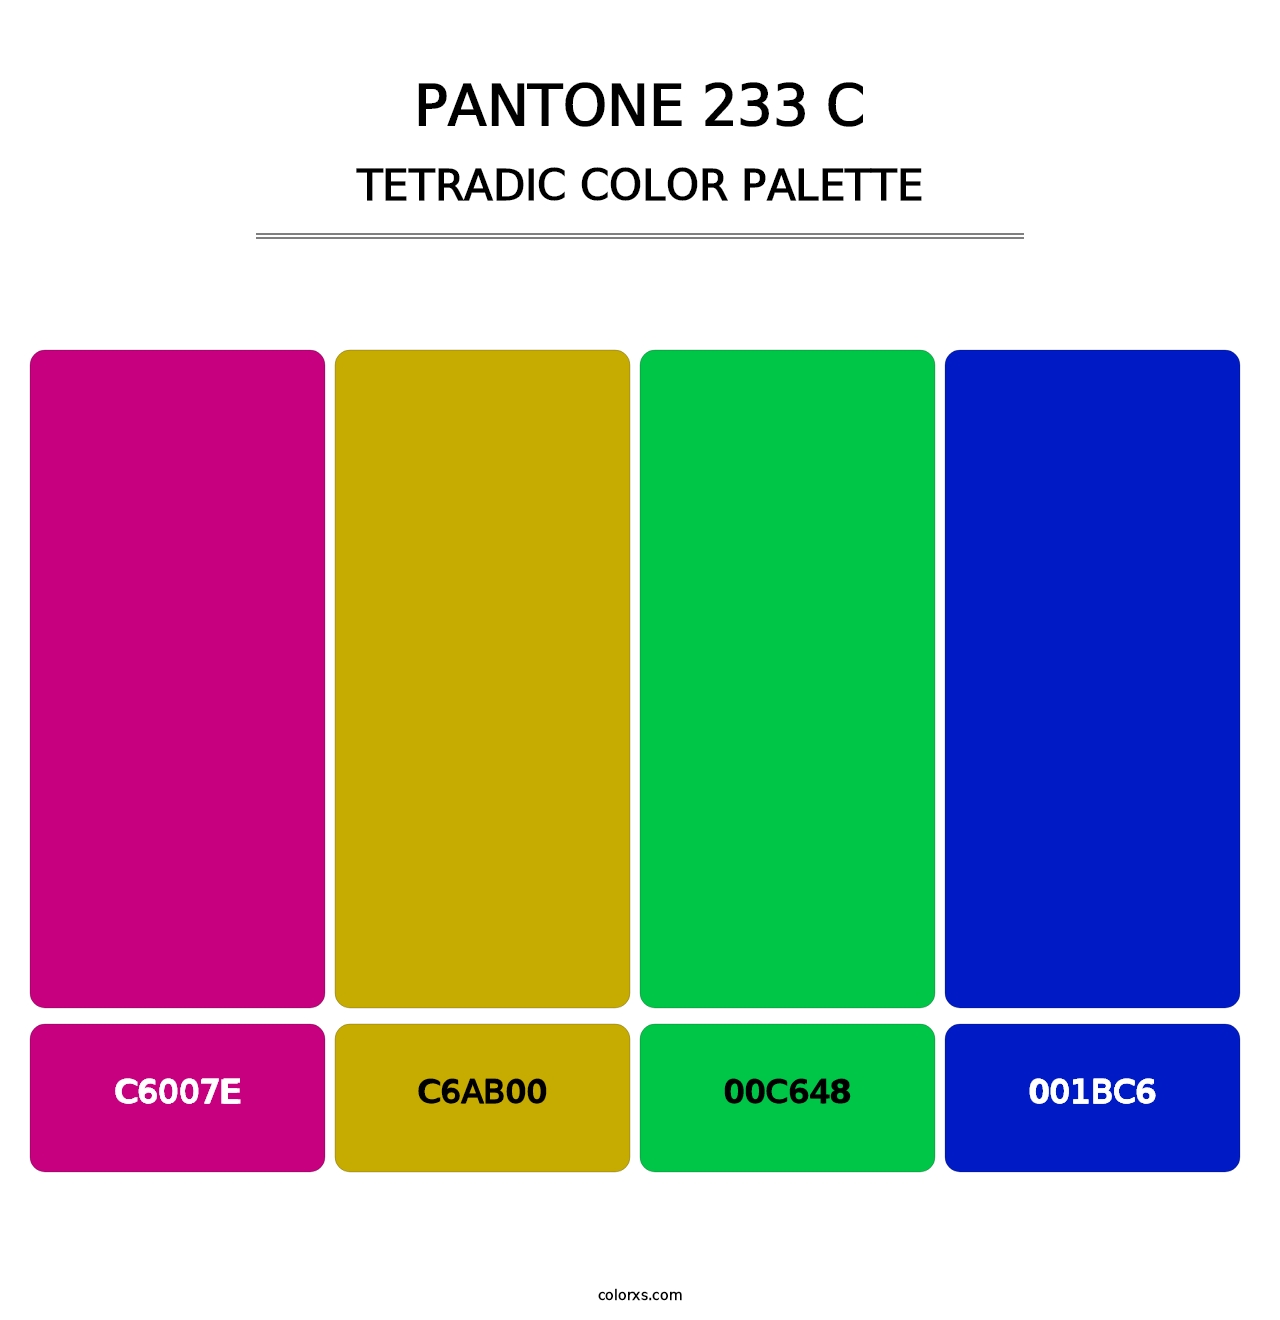 PANTONE 233 C - Tetradic Color Palette